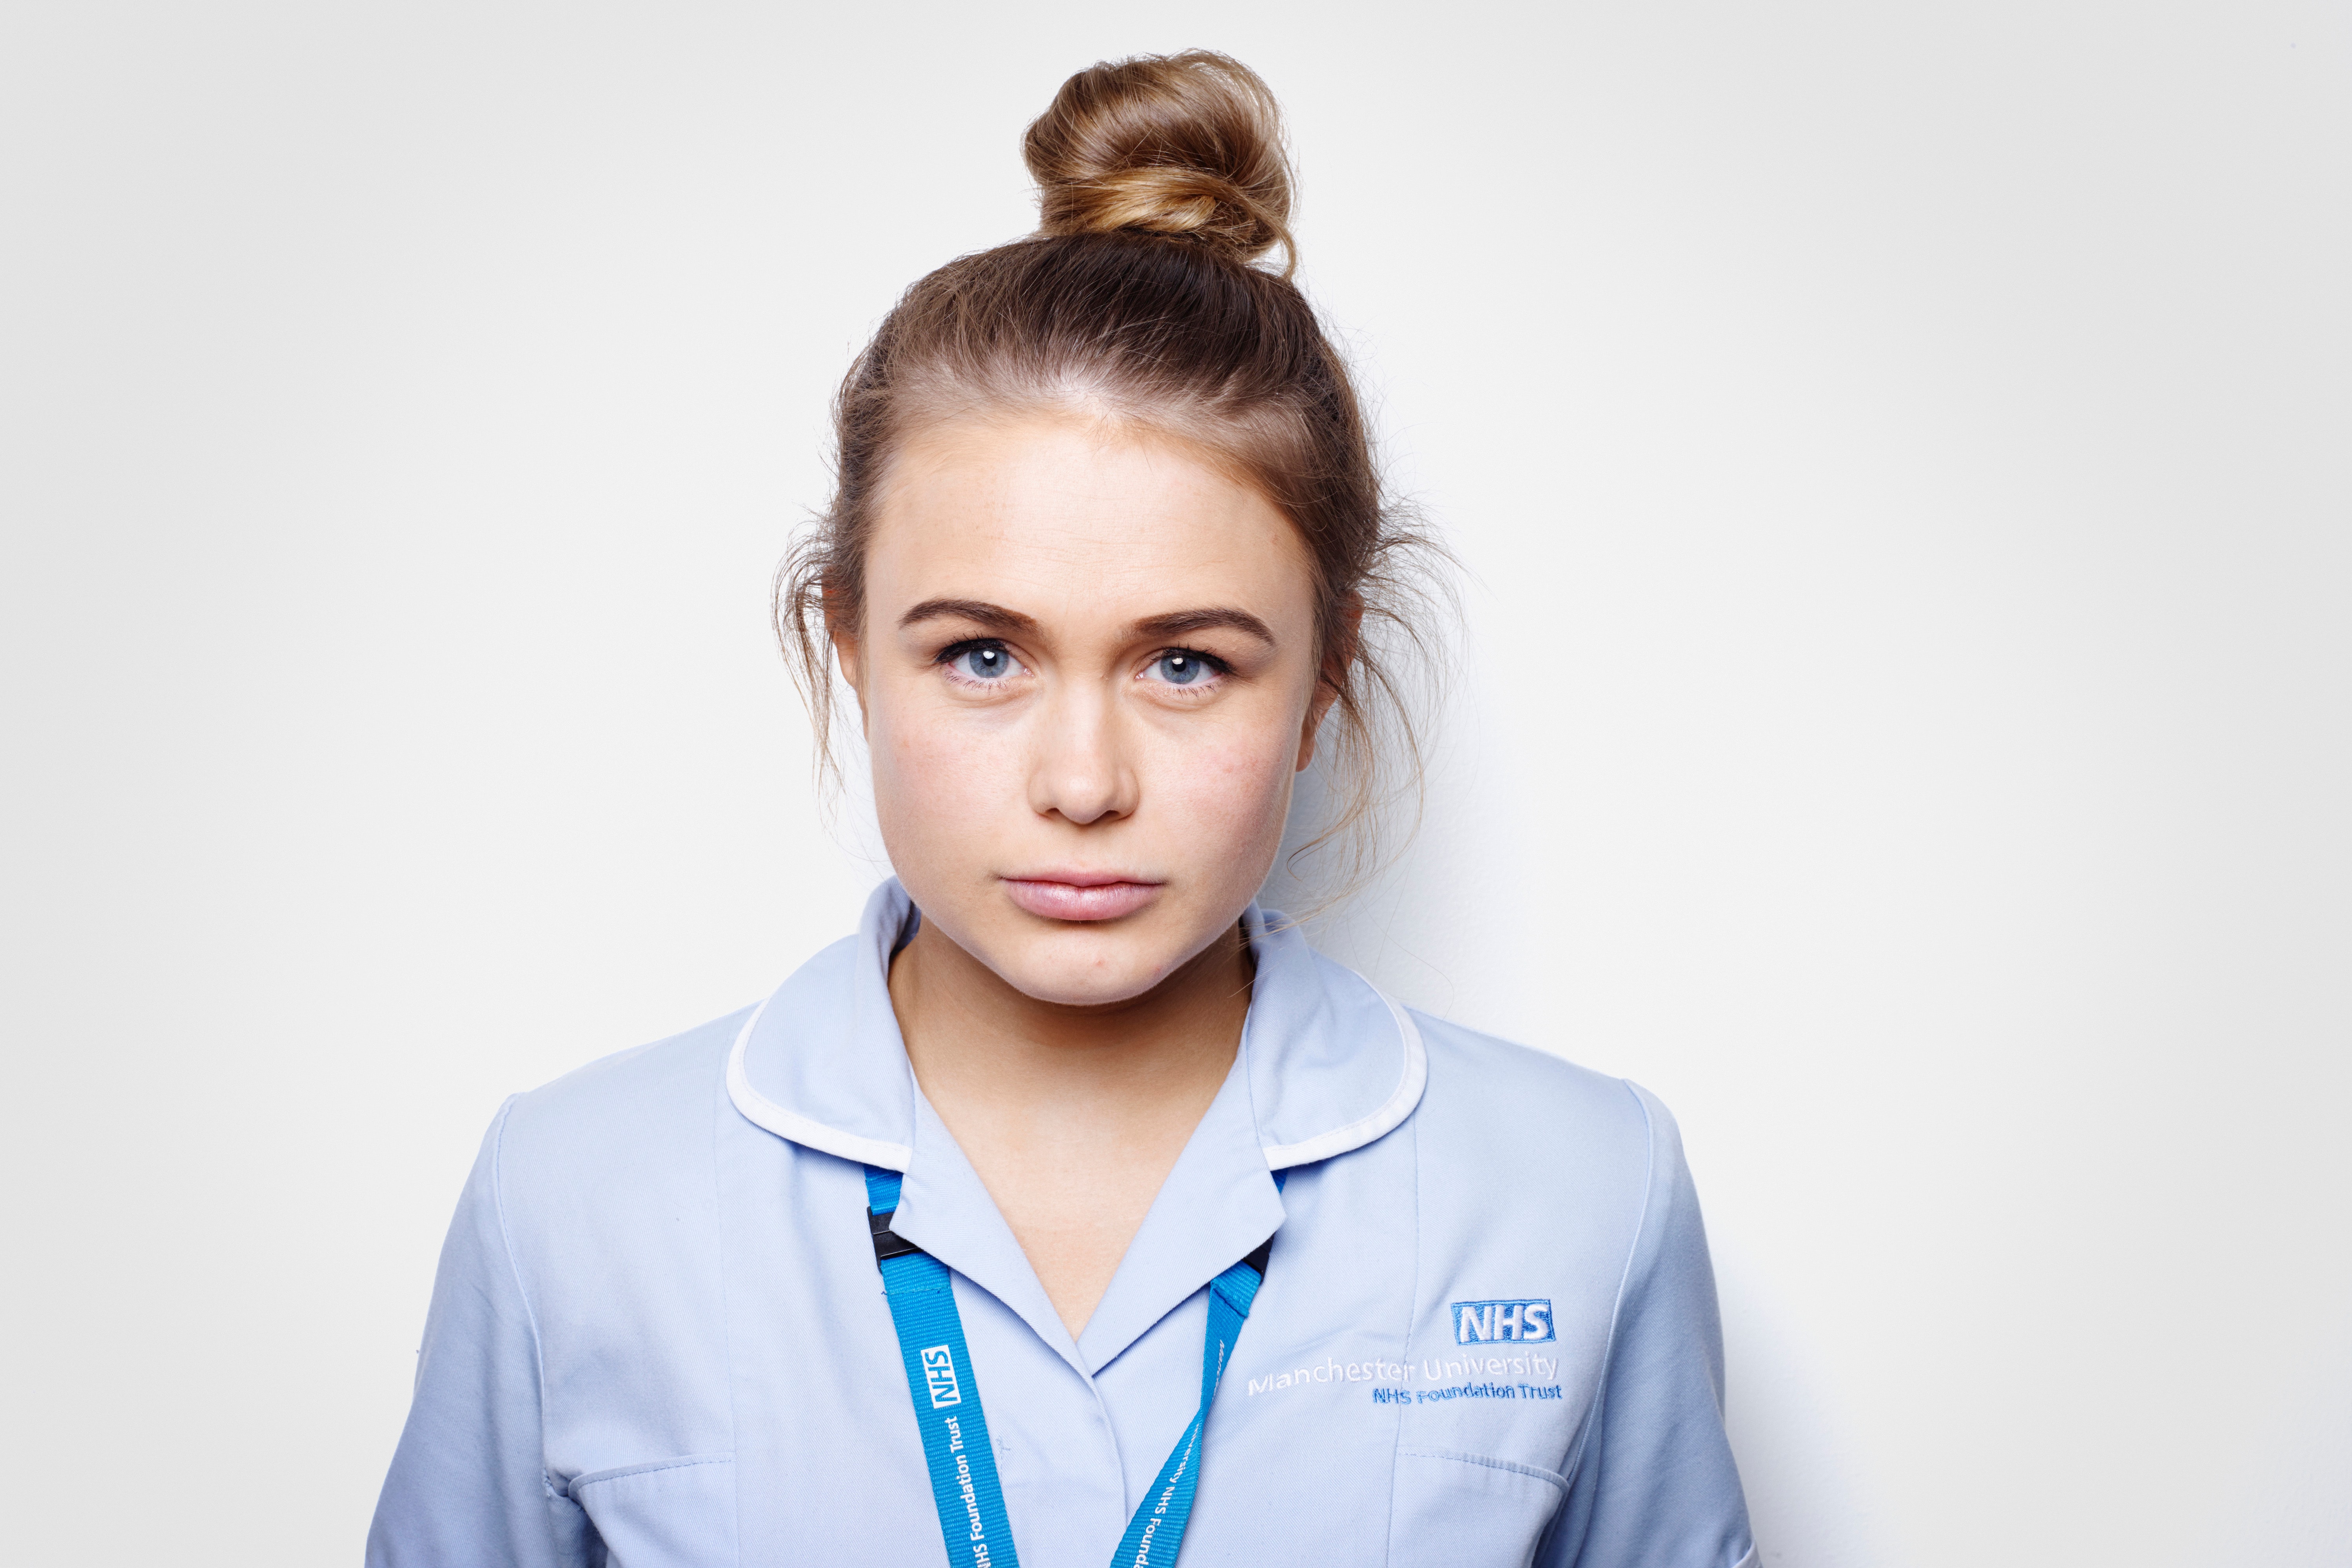 Rankin NHS England Photo Series COVID-19 Pandemic Response Heroes Healthcare Workers 